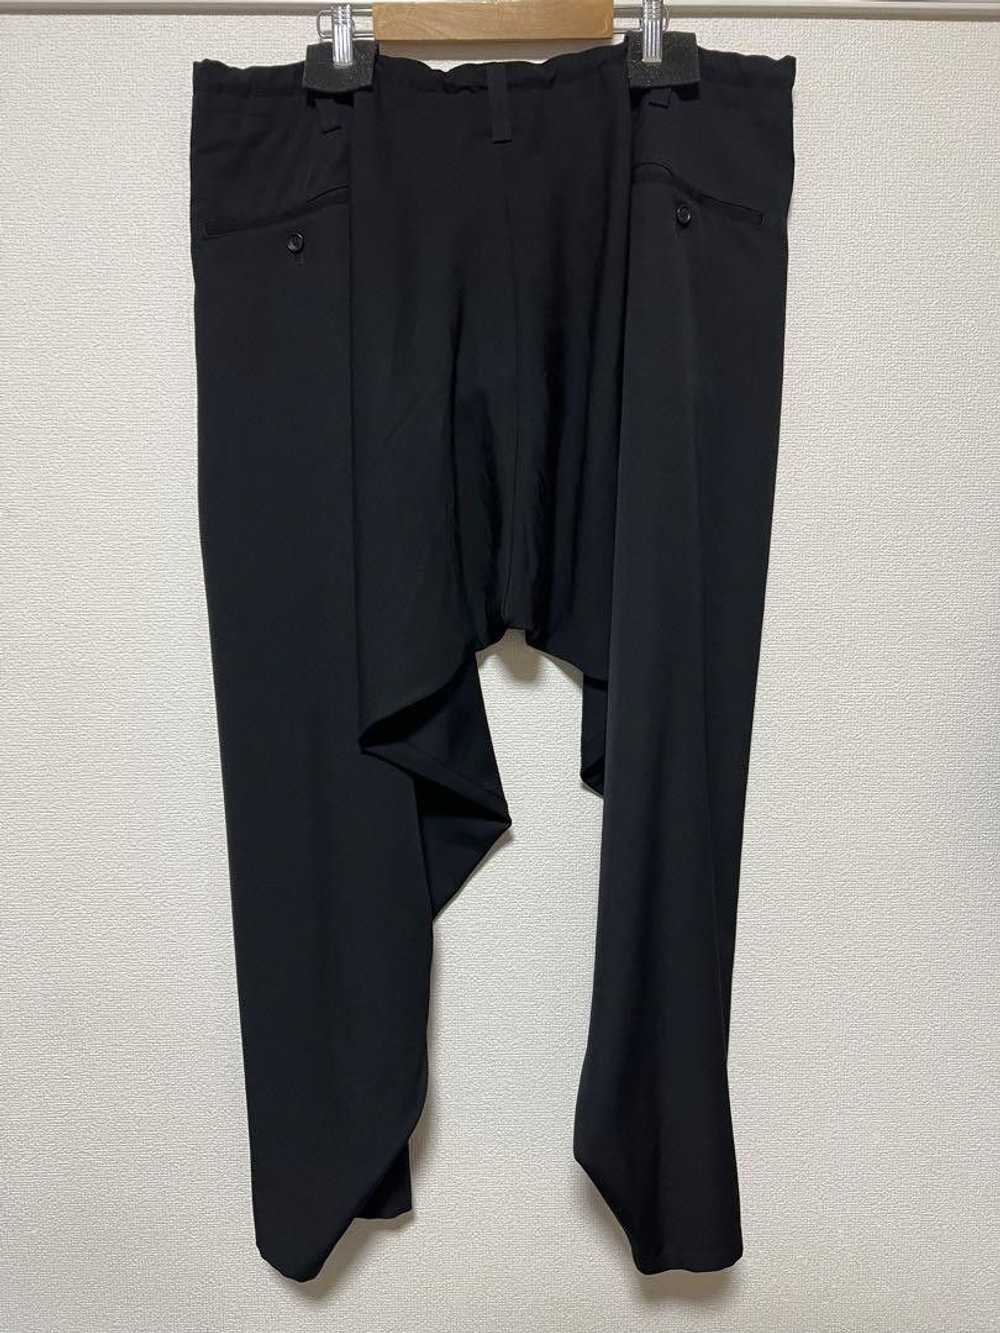 Yohji Yamamoto POUR HOMME 23aw draped pants - image 3